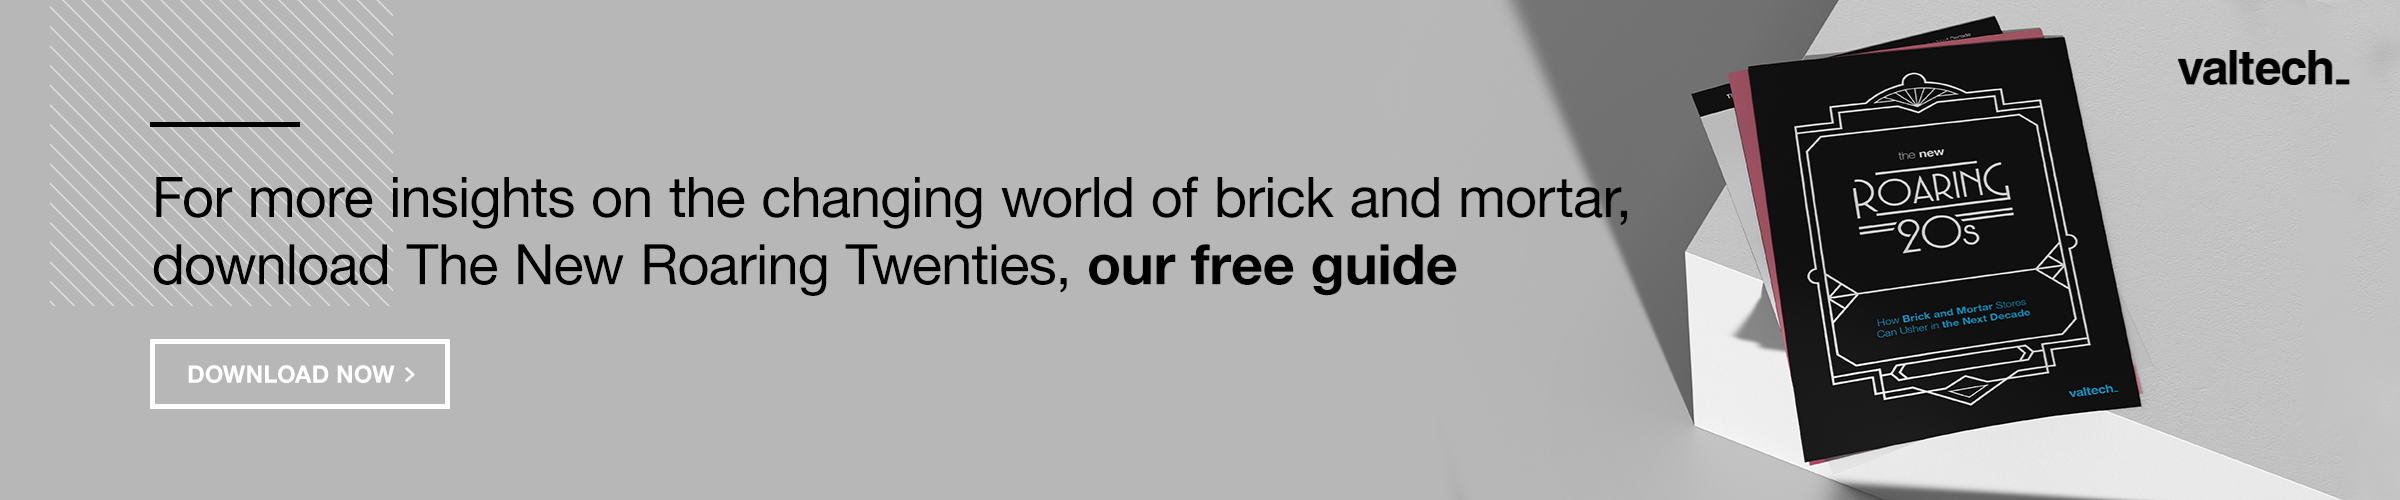 NRF-Brick-and-Mortar-Downloadable-Blog-Banner-Ad.png